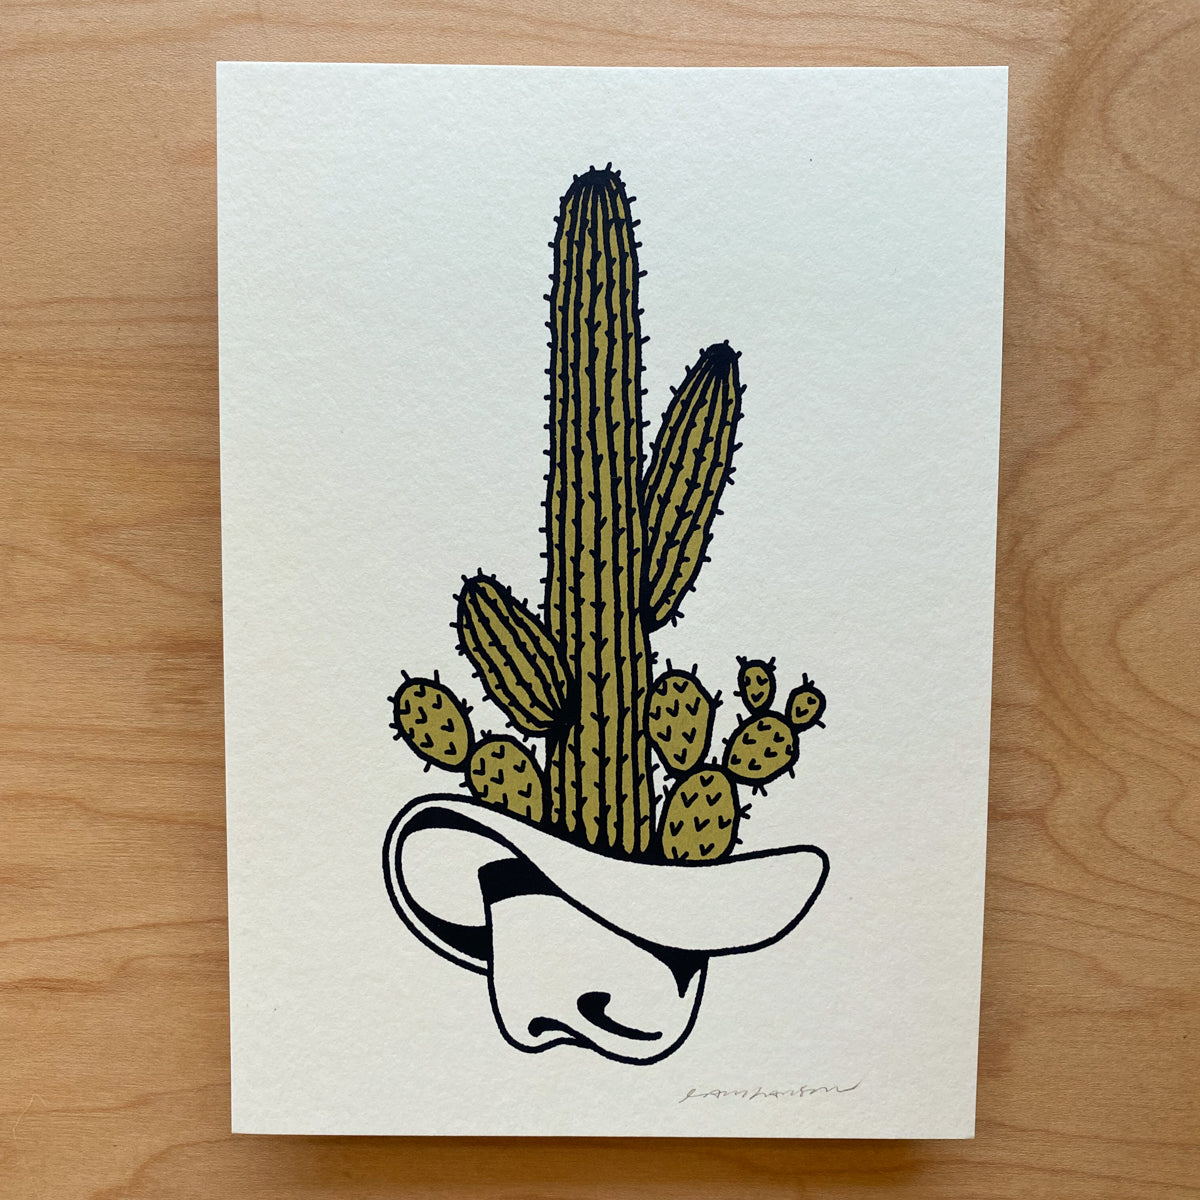 Desert Gold Cactus Contact Paper